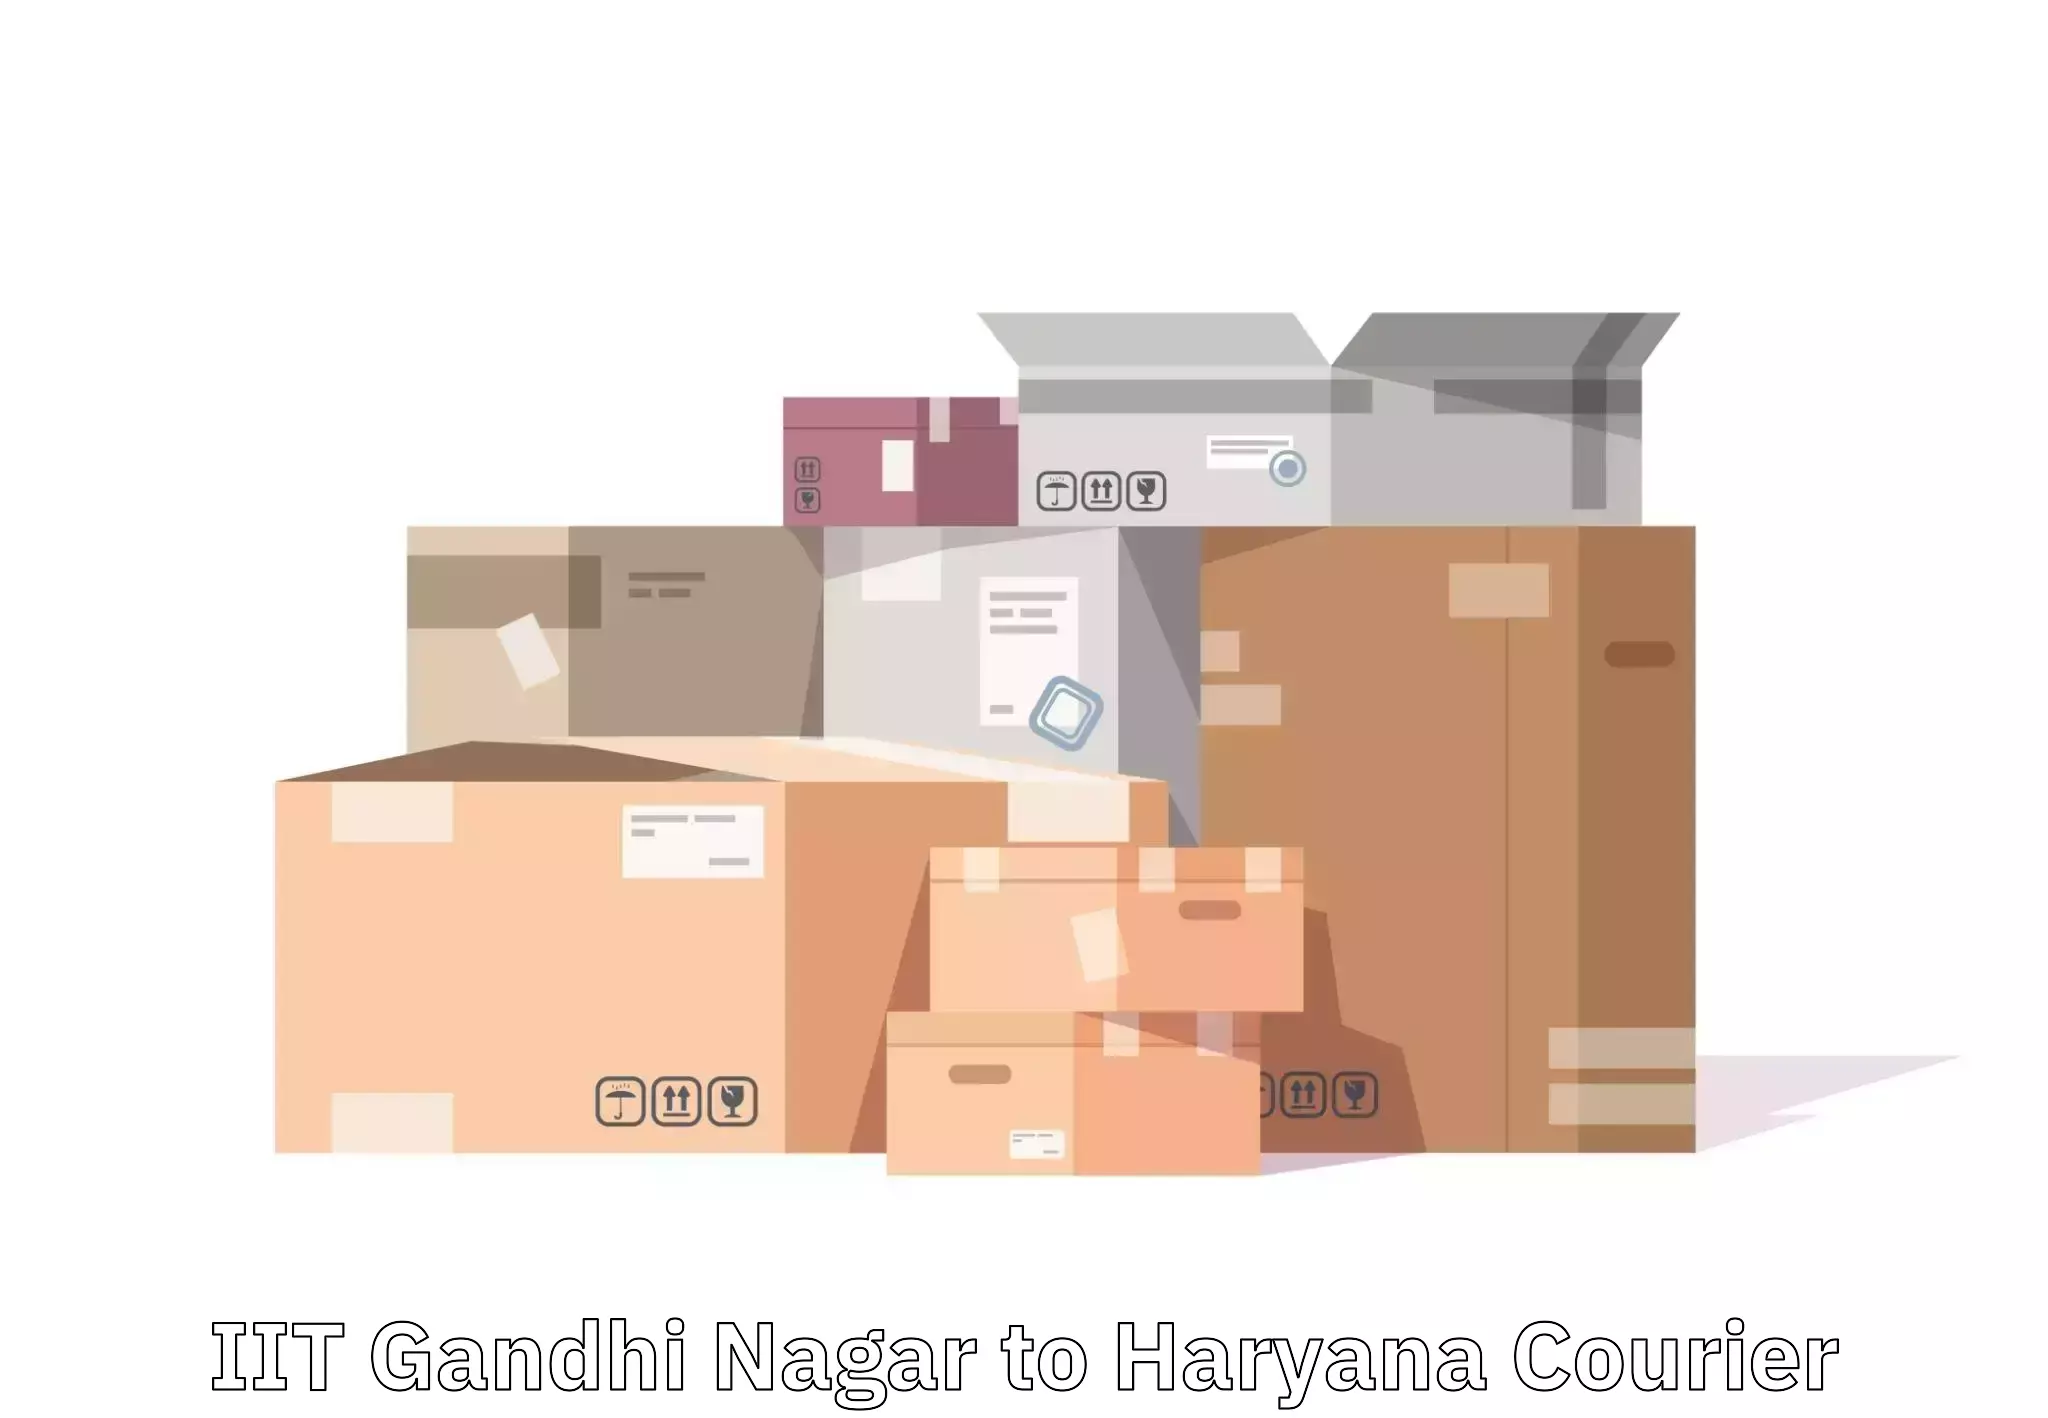 Luggage shipment tracking IIT Gandhi Nagar to Ellenabad